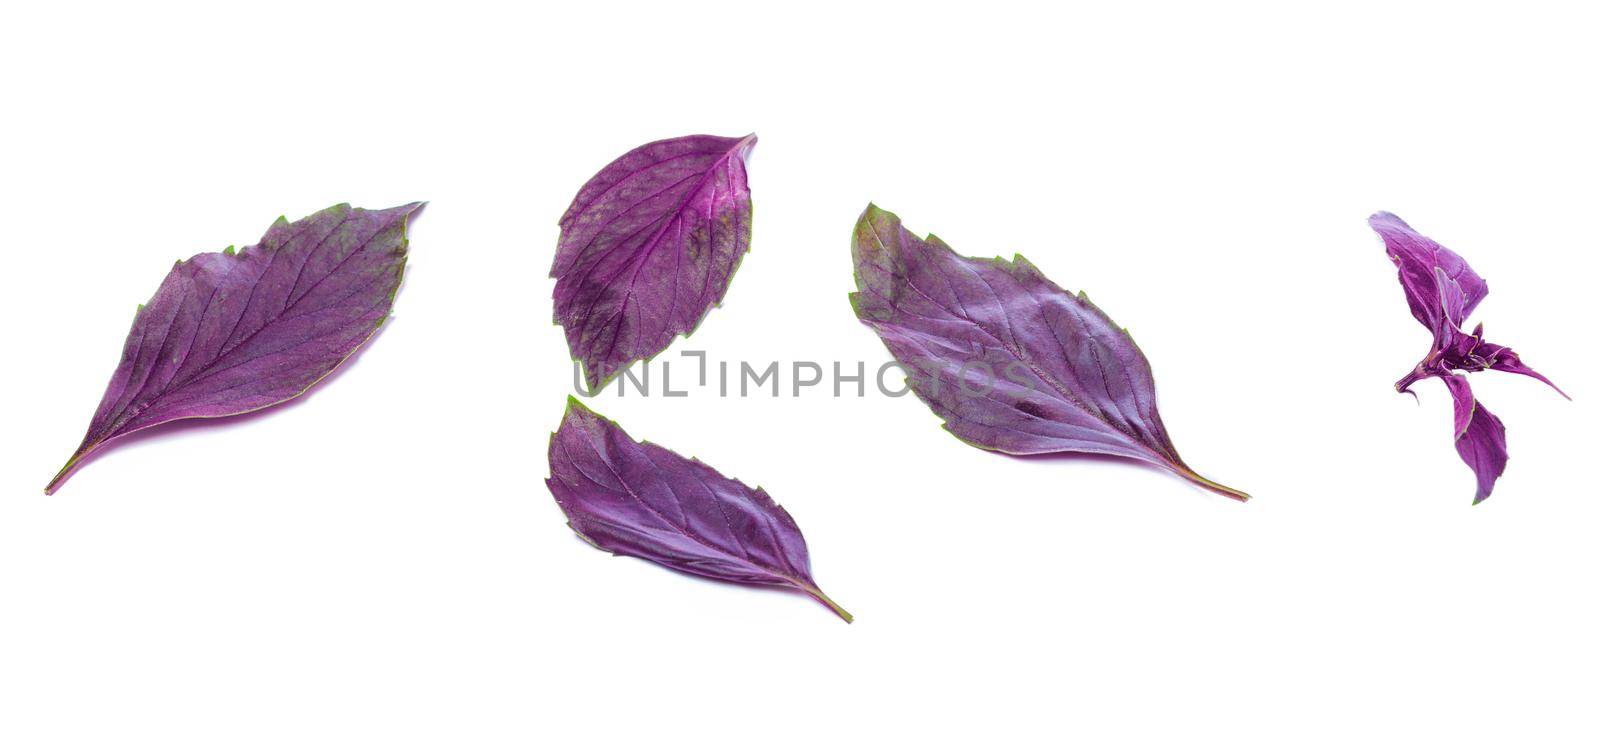 Close up studio shot of fresh red basil herb leaves isolated on white background. Purple Dark Opal Basil by Fabrikasimf